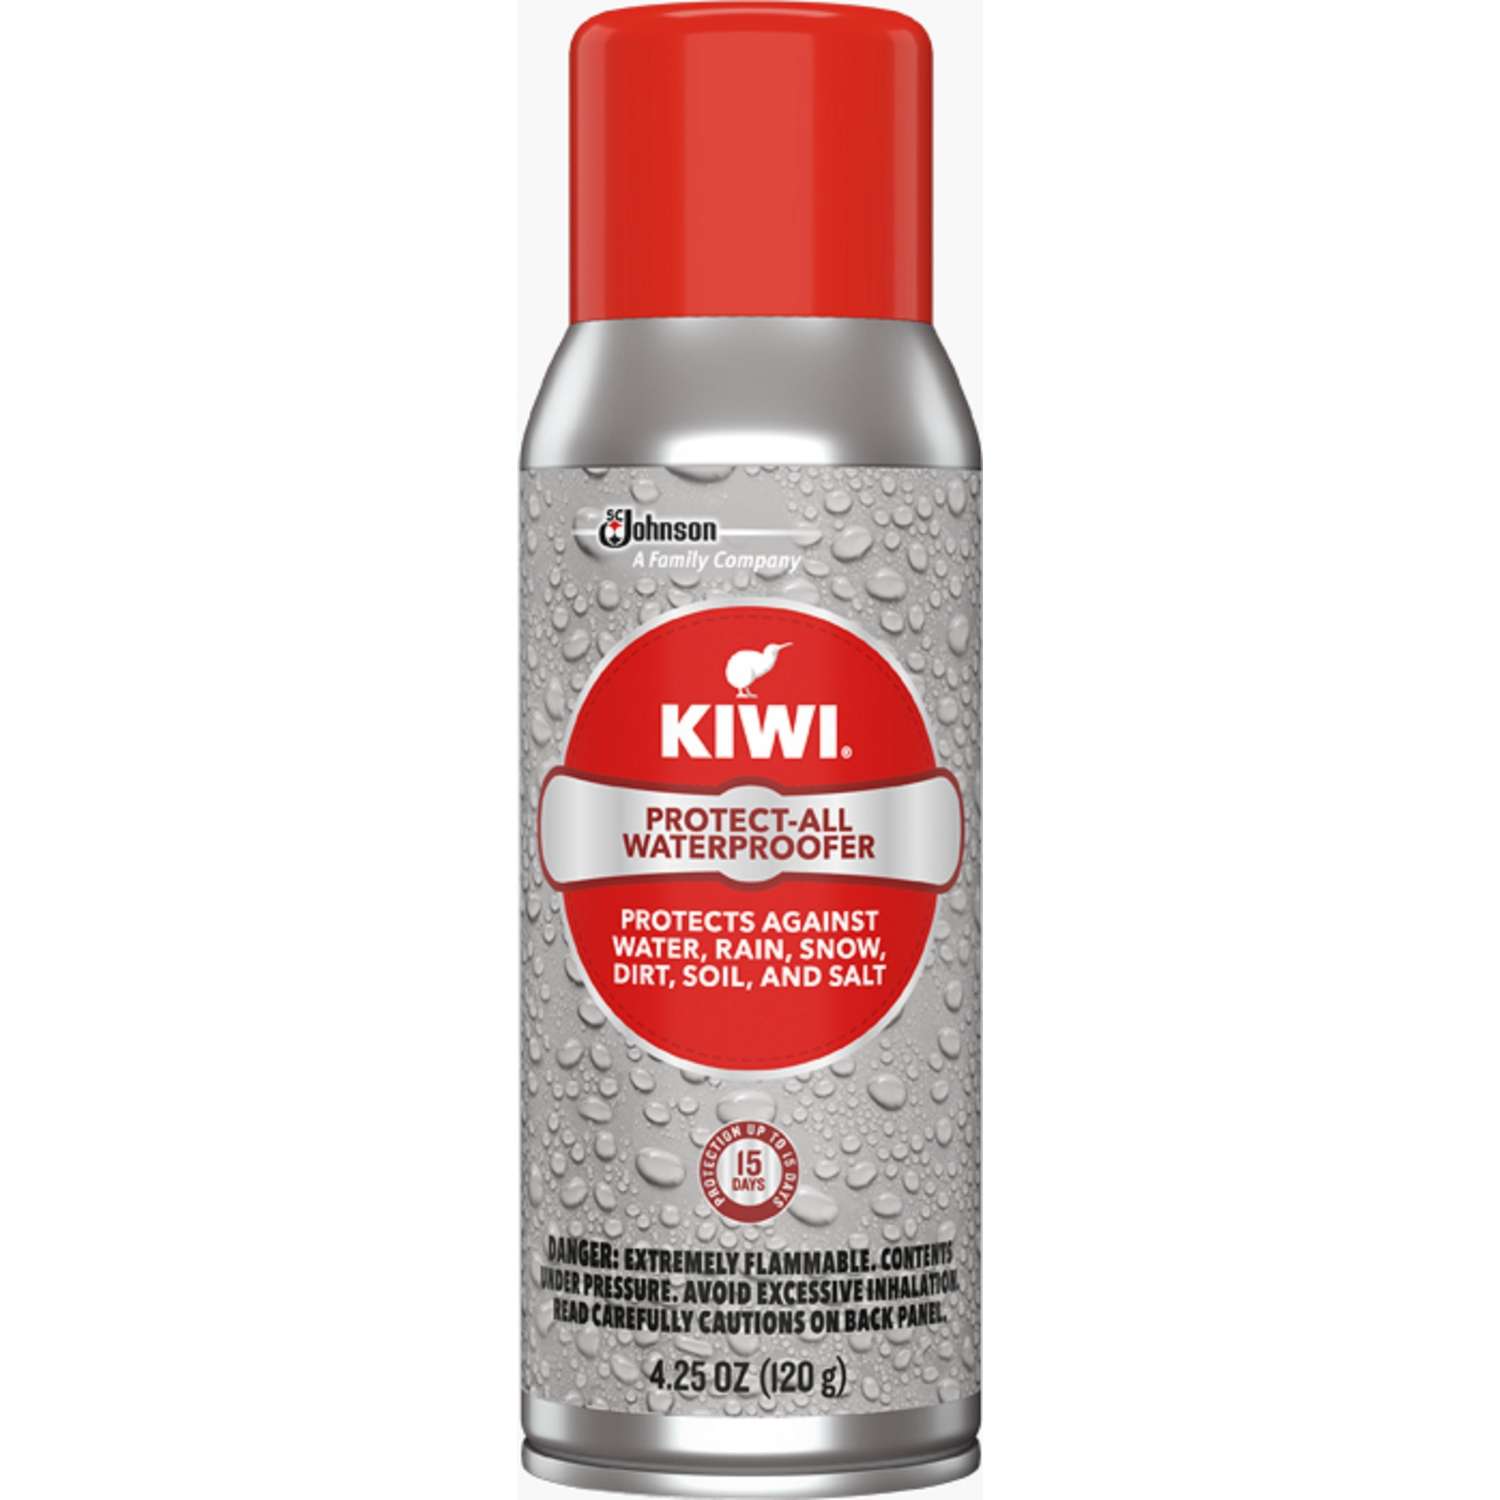 Carpet Patch Repair Service - KIWI Cleaning Services